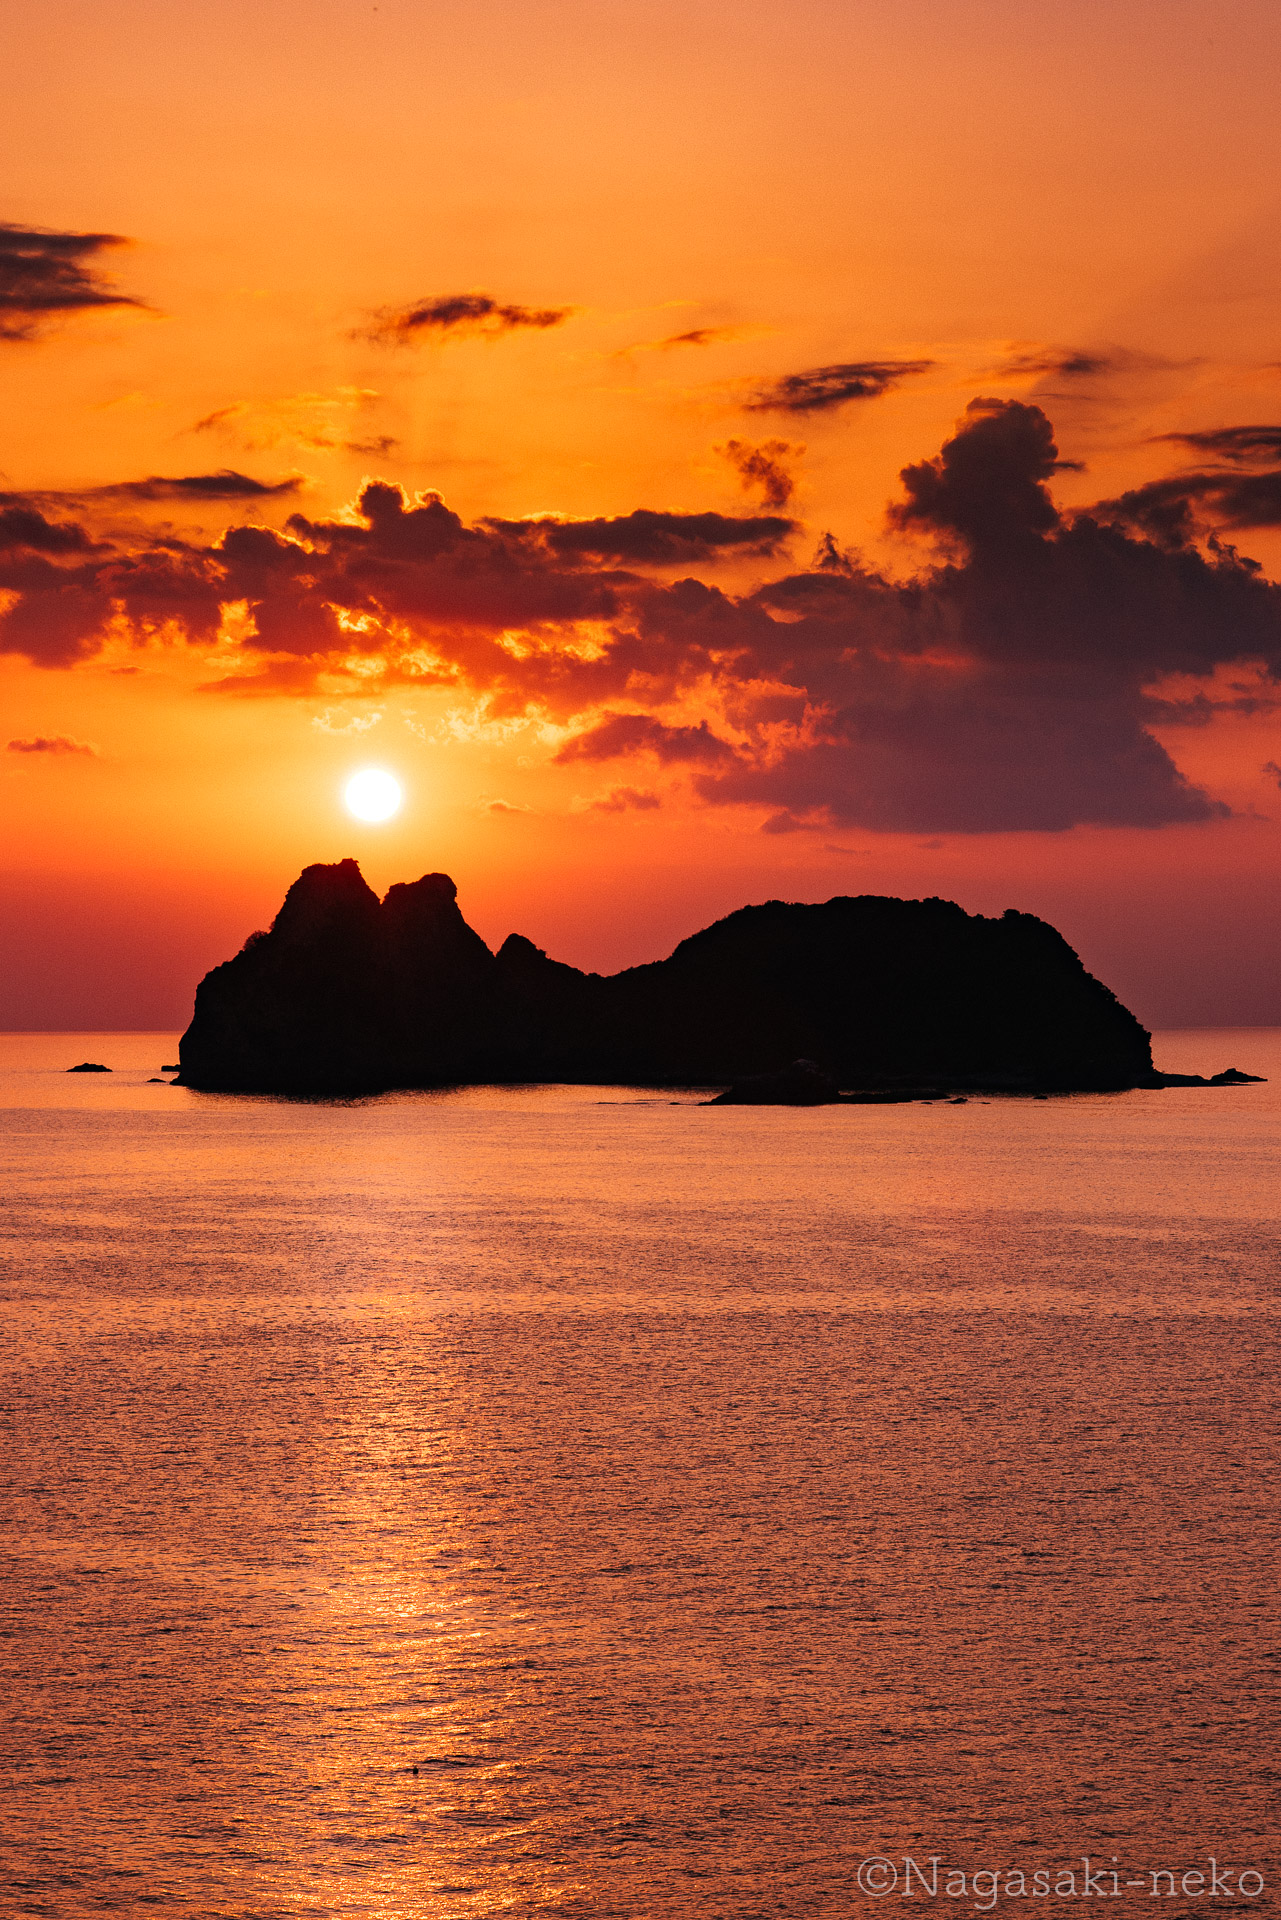 Sunset at Kagura Island